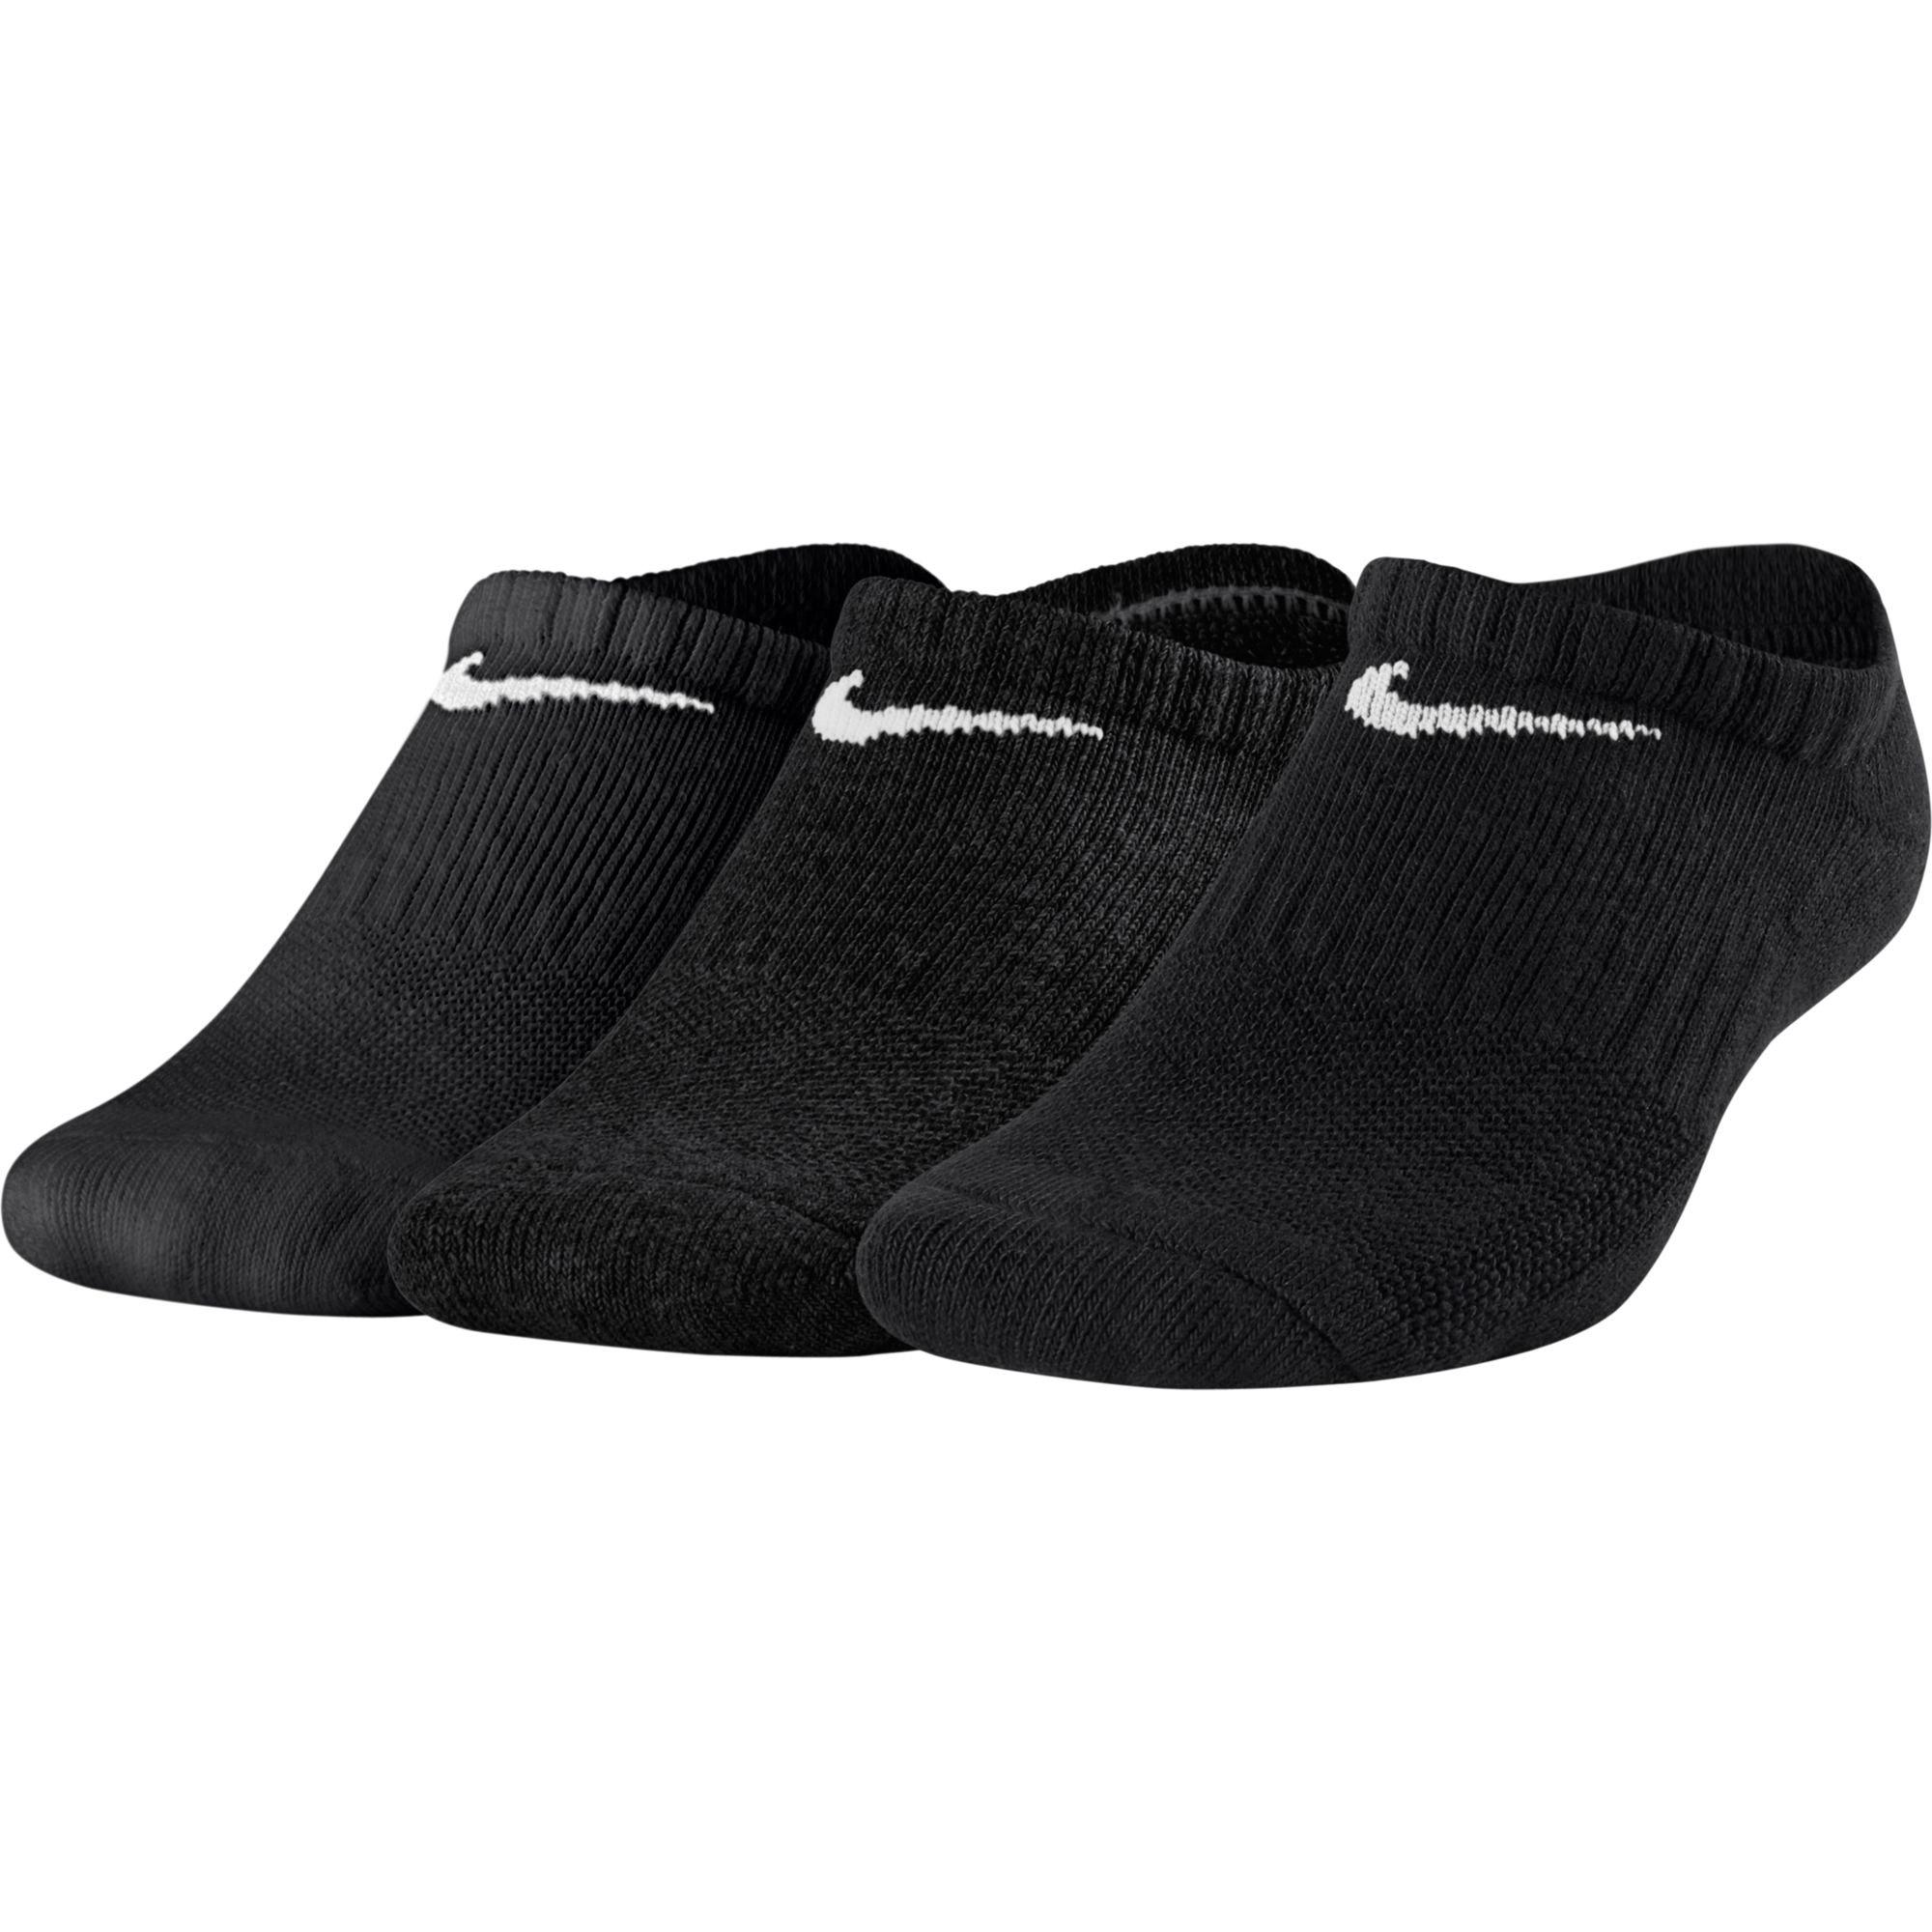 Nike Kids Performance Cushioned No-Show Tennis Socks (3 Pairs) - Black ...